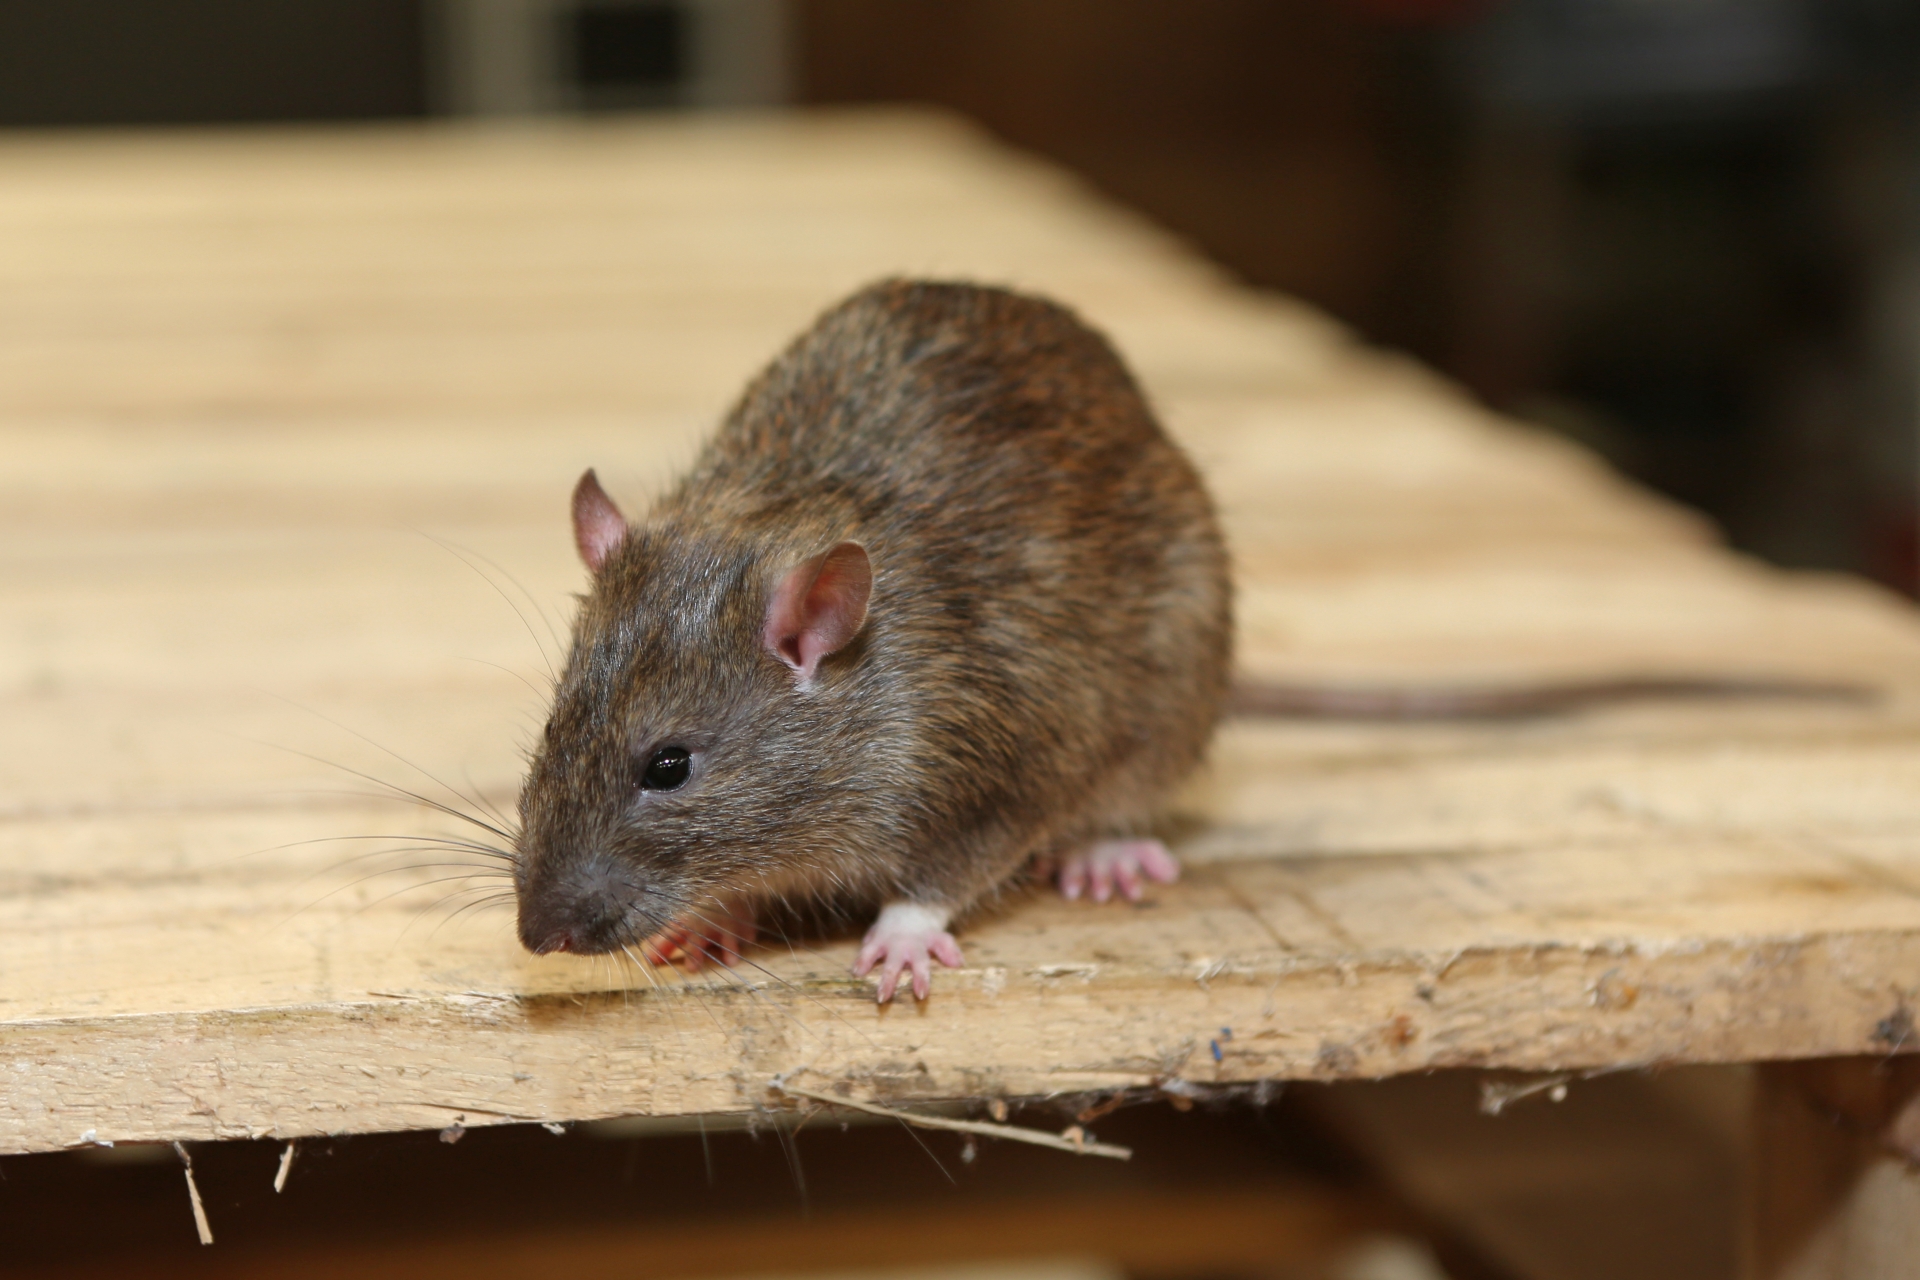 Rat extermination, Pest Control in Grays, Badgers Dene, RM17. Call Now 020 8166 9746